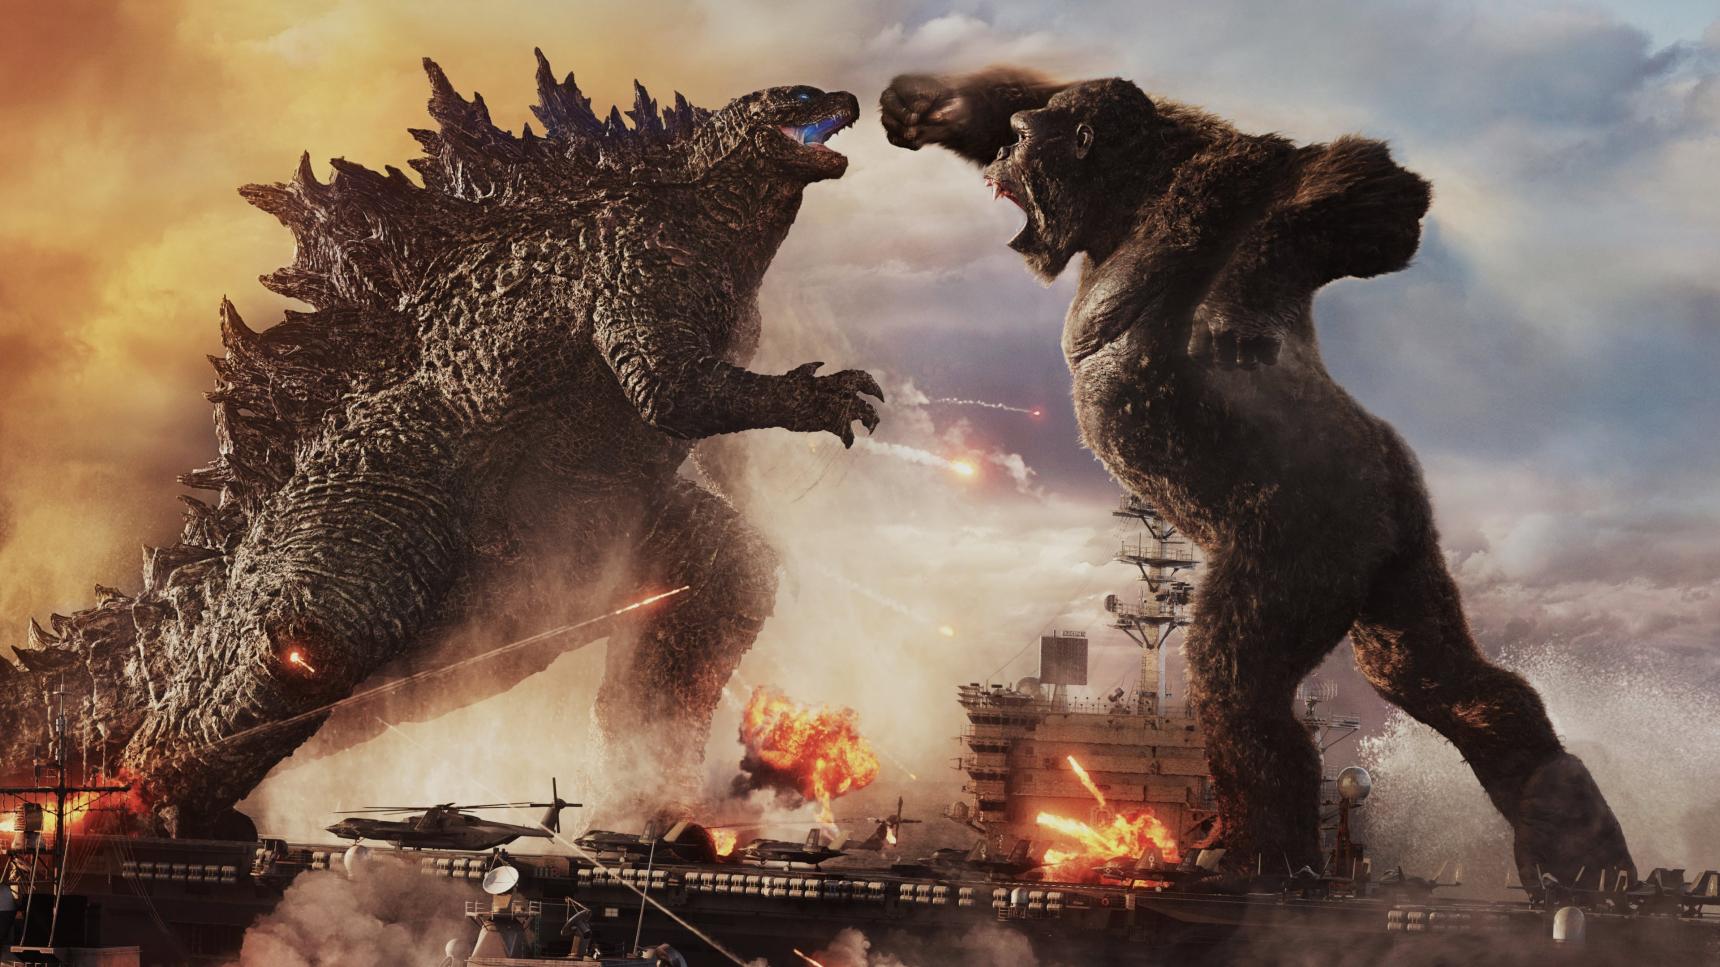 Fondo de pantalla de la película Godzilla vs Kong en Cuevana 3 gratis